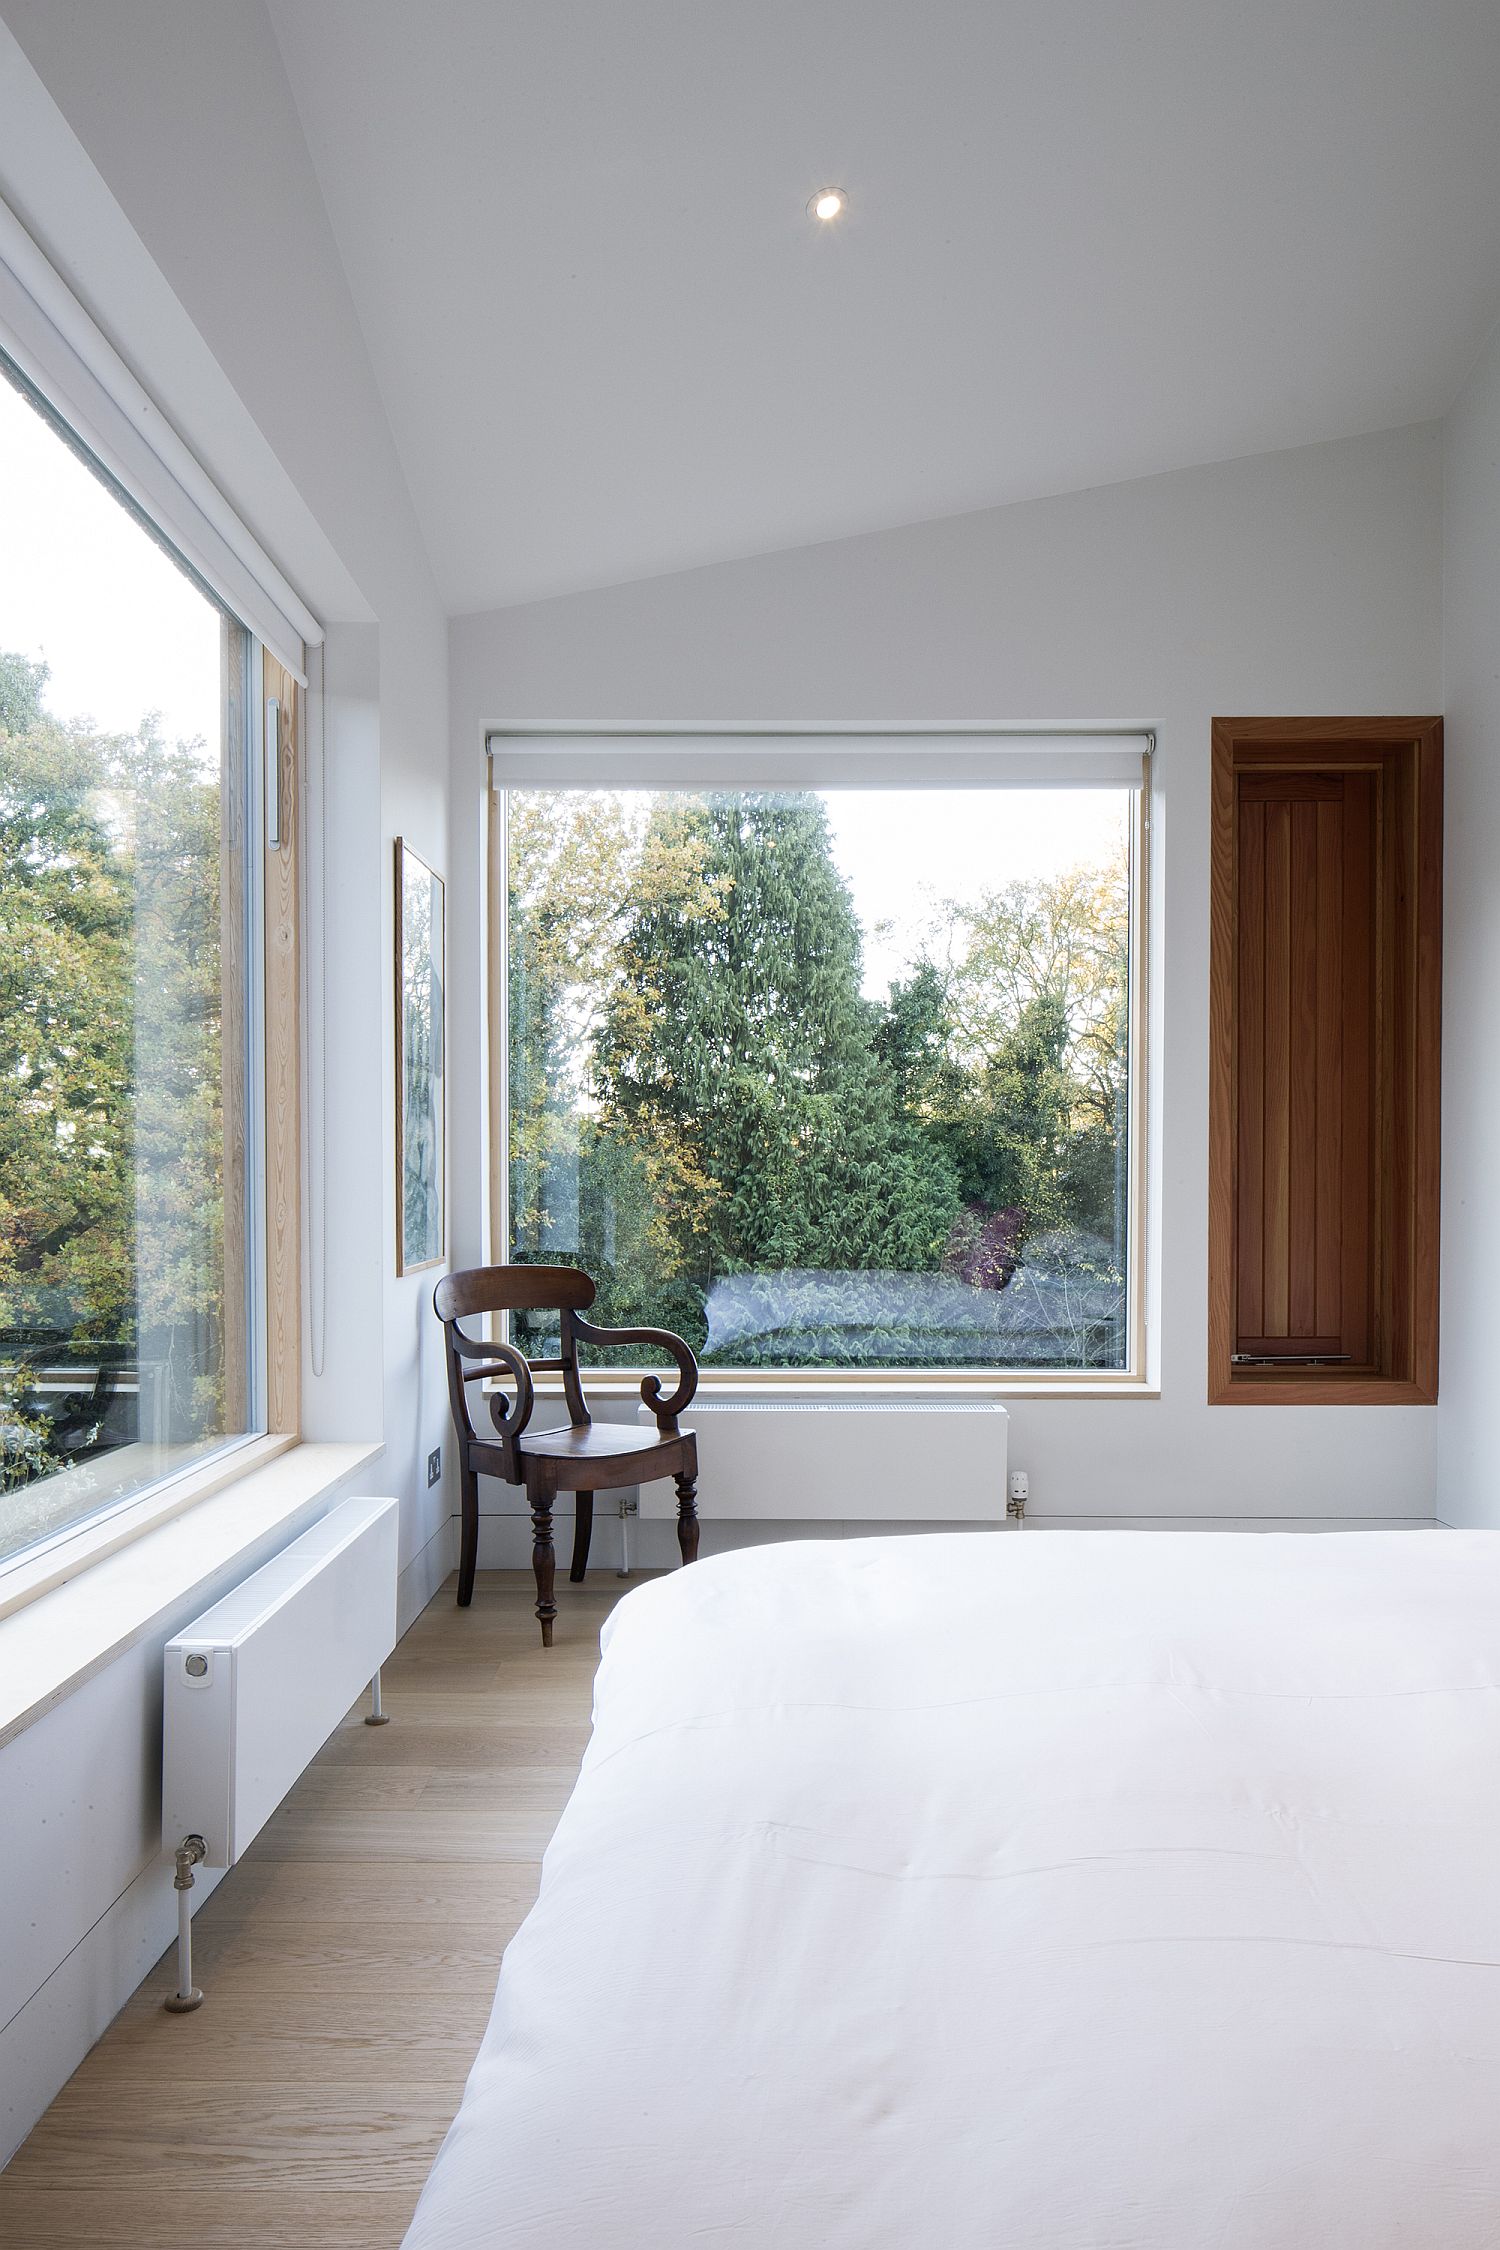 Large glass windows usher ample light into the modern white bedroom